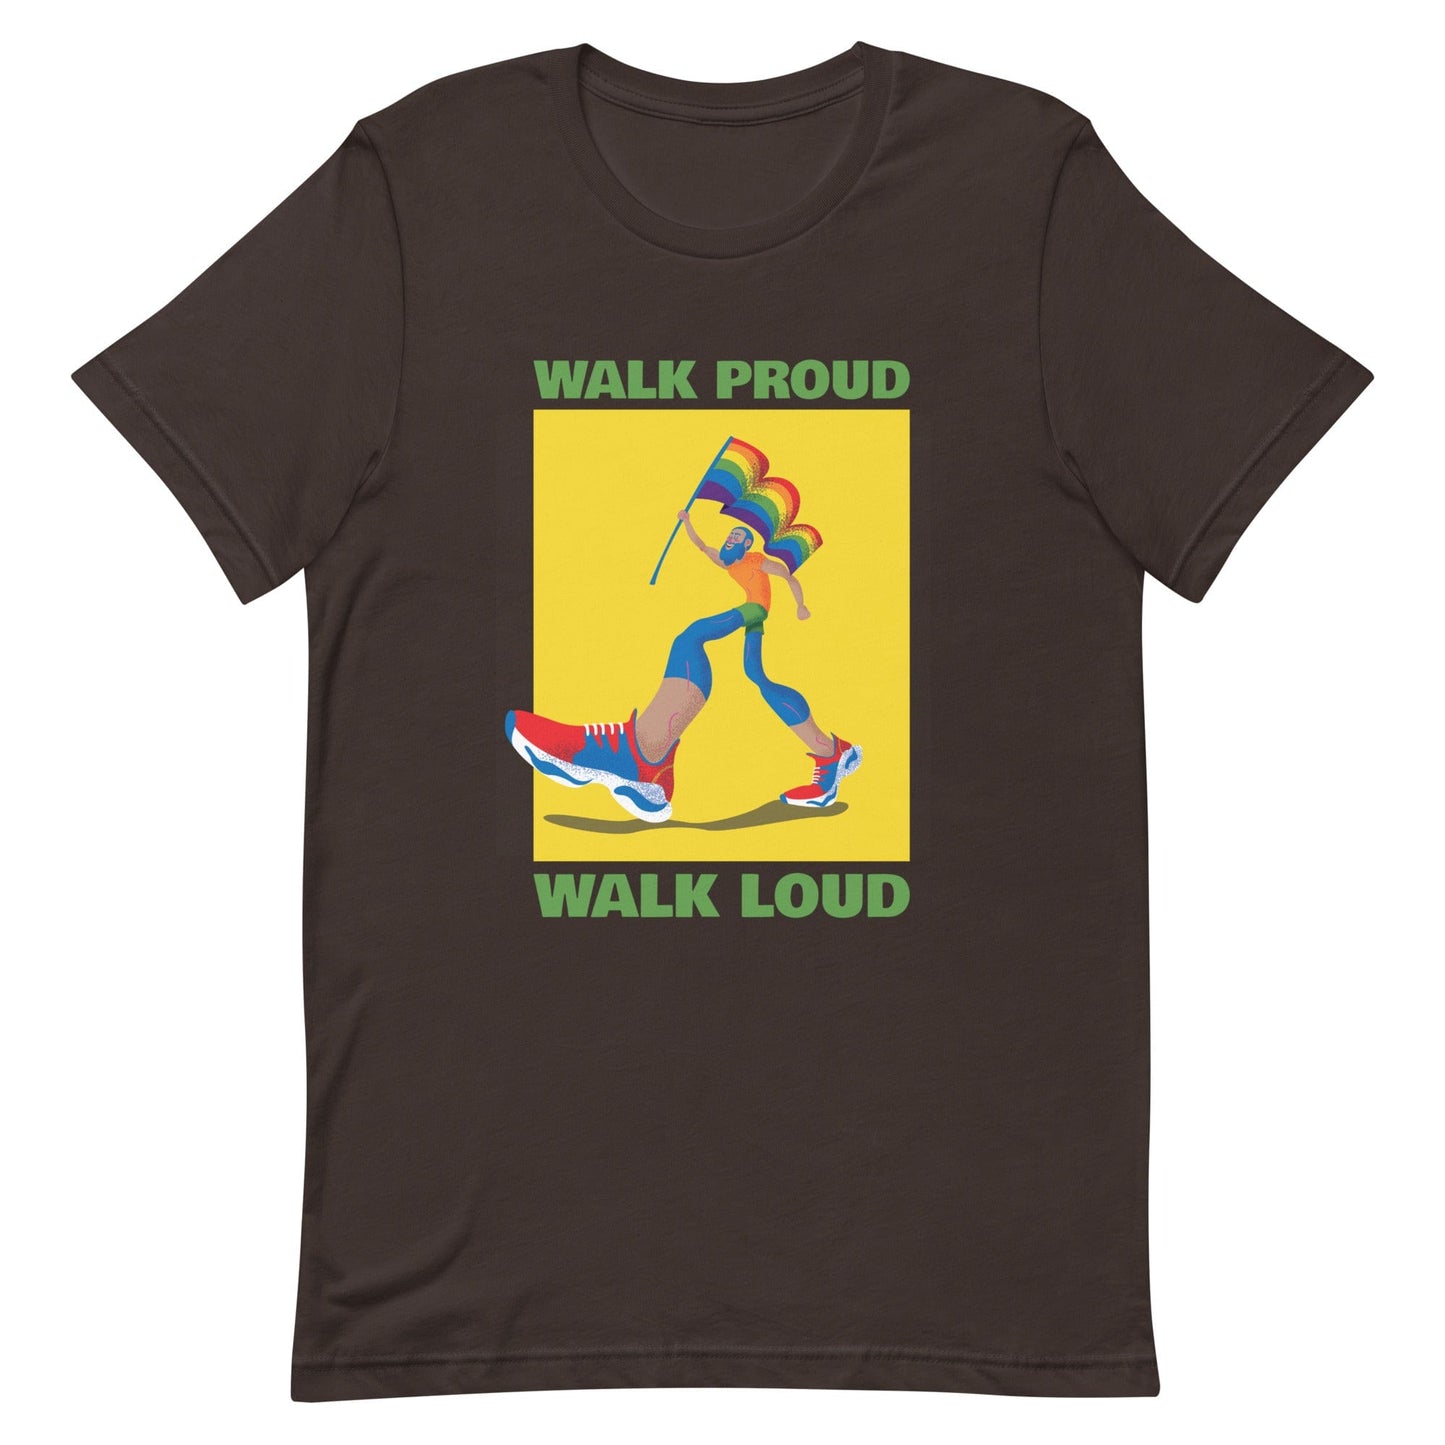 queer-pride-t-shirt-walk-proud-walk-loud-lgbtq-gay-apparel-brown-front